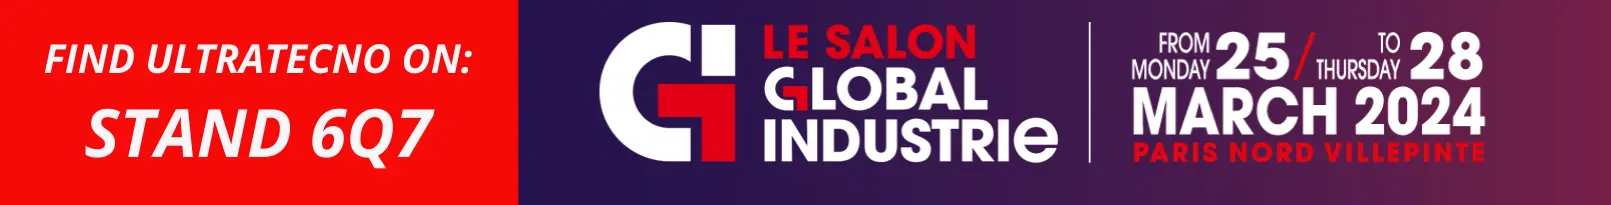 Le_salon_global_industrie